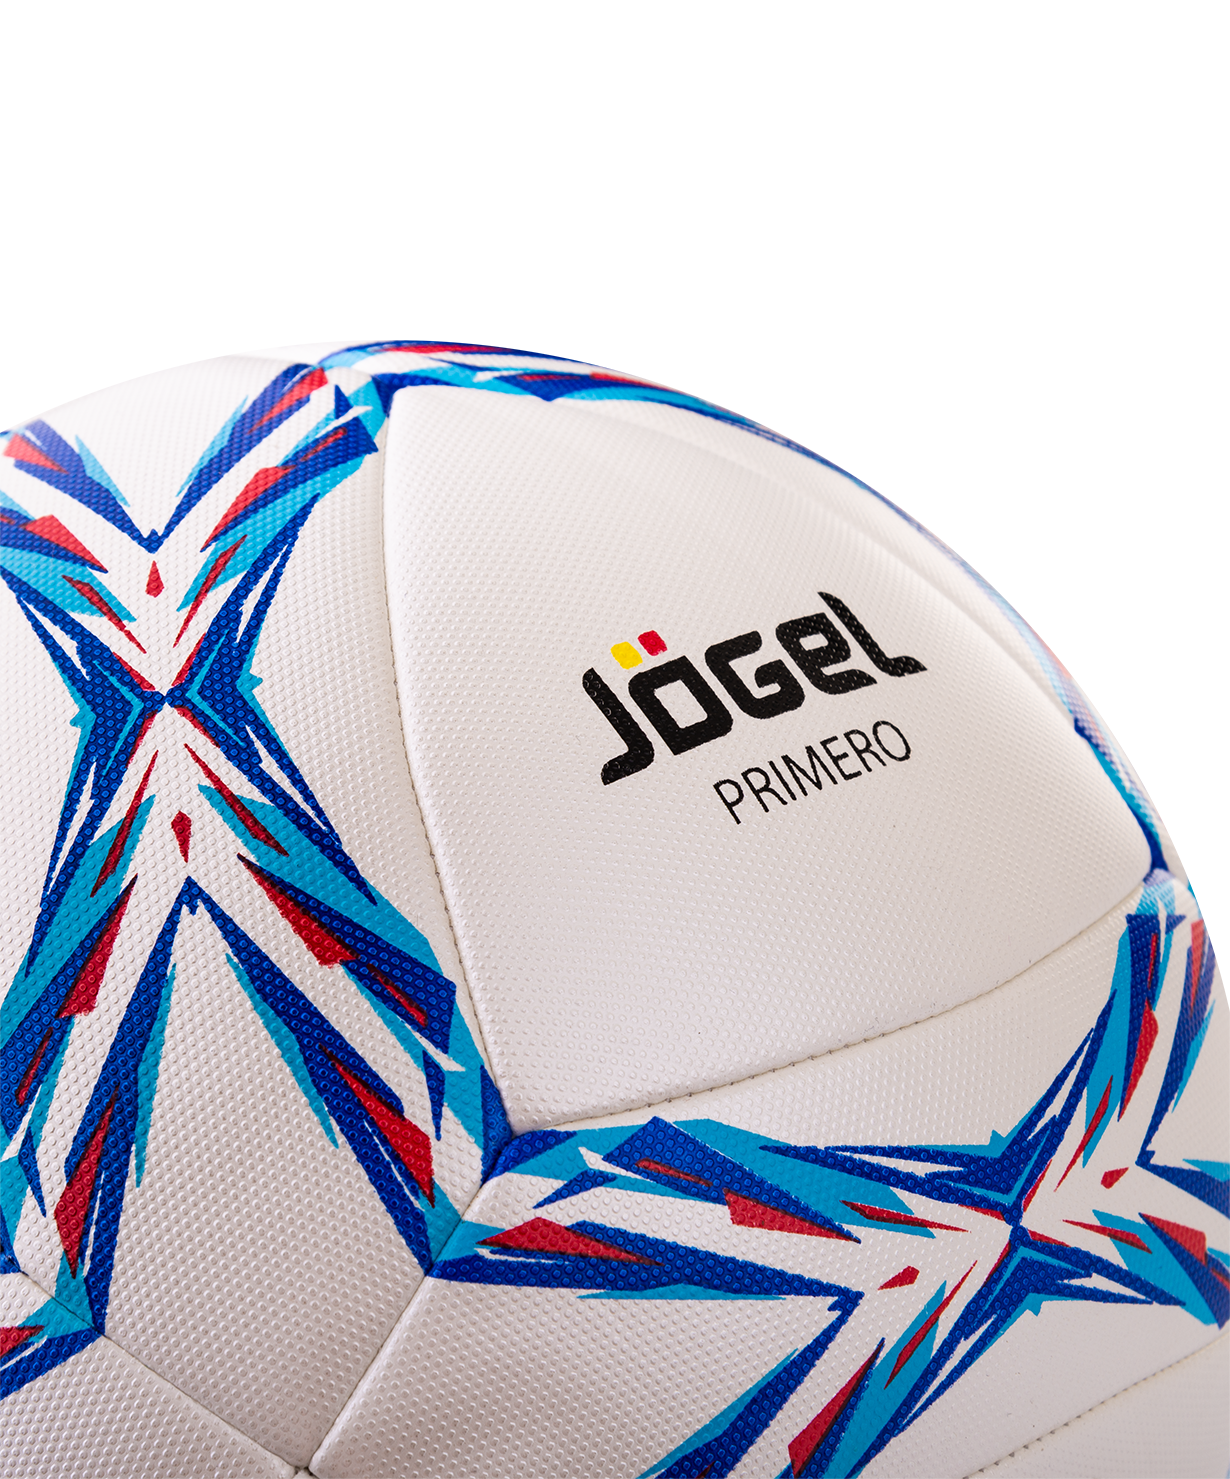 Jogel новая форма. Мяч Jogel js-910 primero. Мяч Jogel primero 4. Мяч футбольный Jögel primero. Футбольный мяч Jogel primero №4, размер 4.